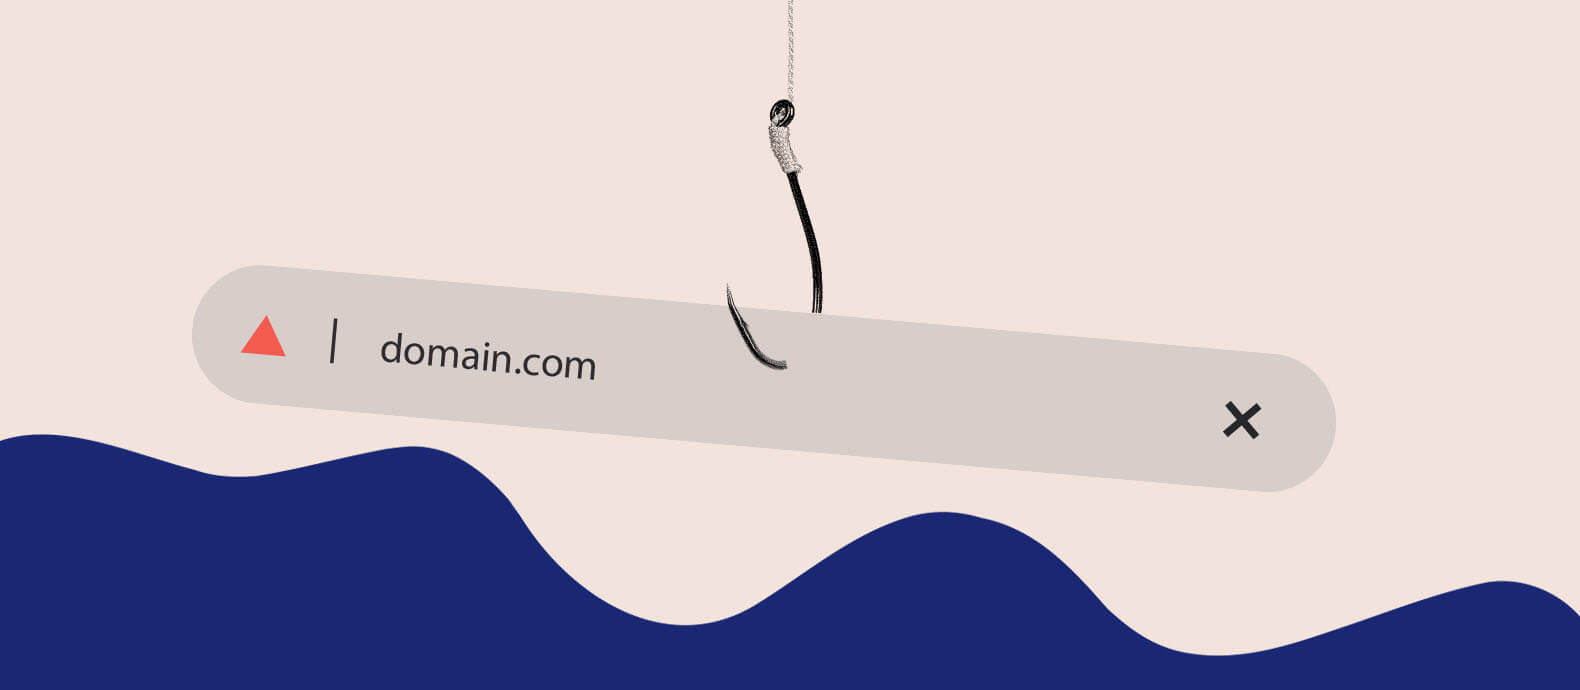 A deep dive into similar domain name phishing schemes